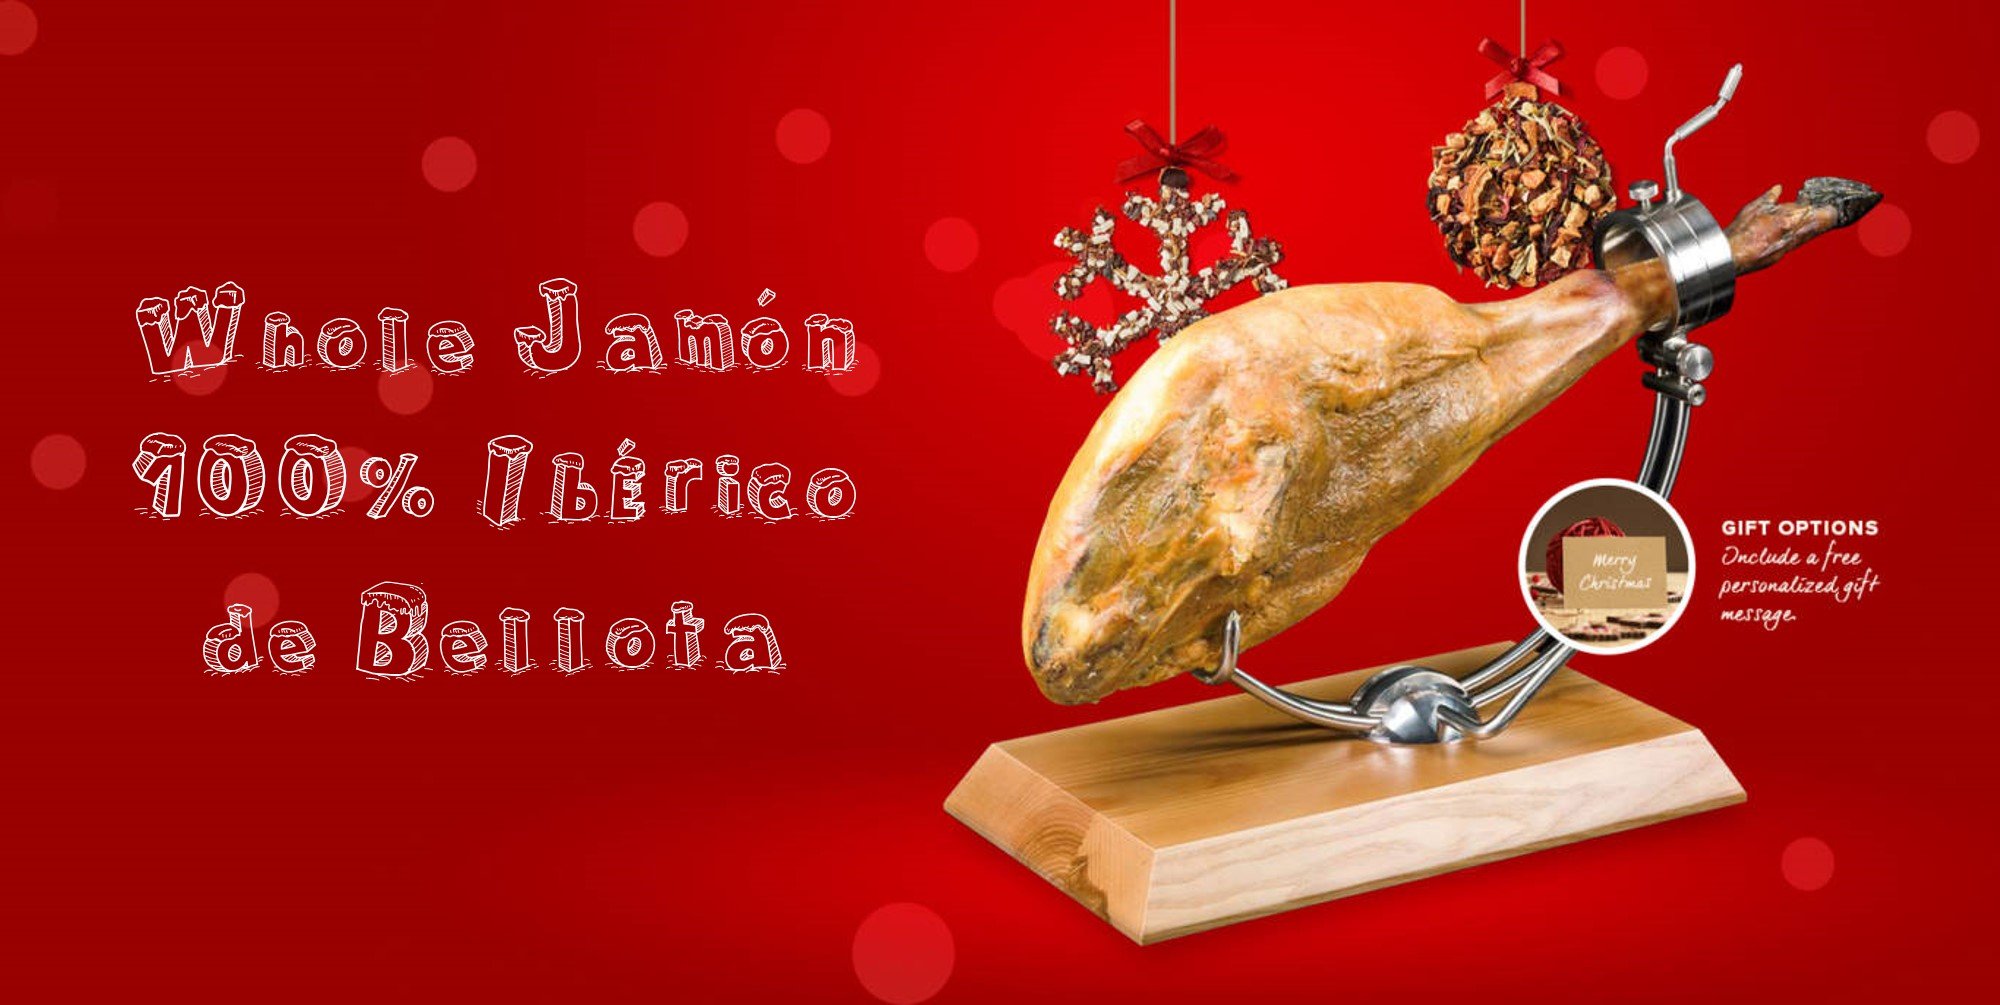 Whole Jamon 100% Iberico de Bellota